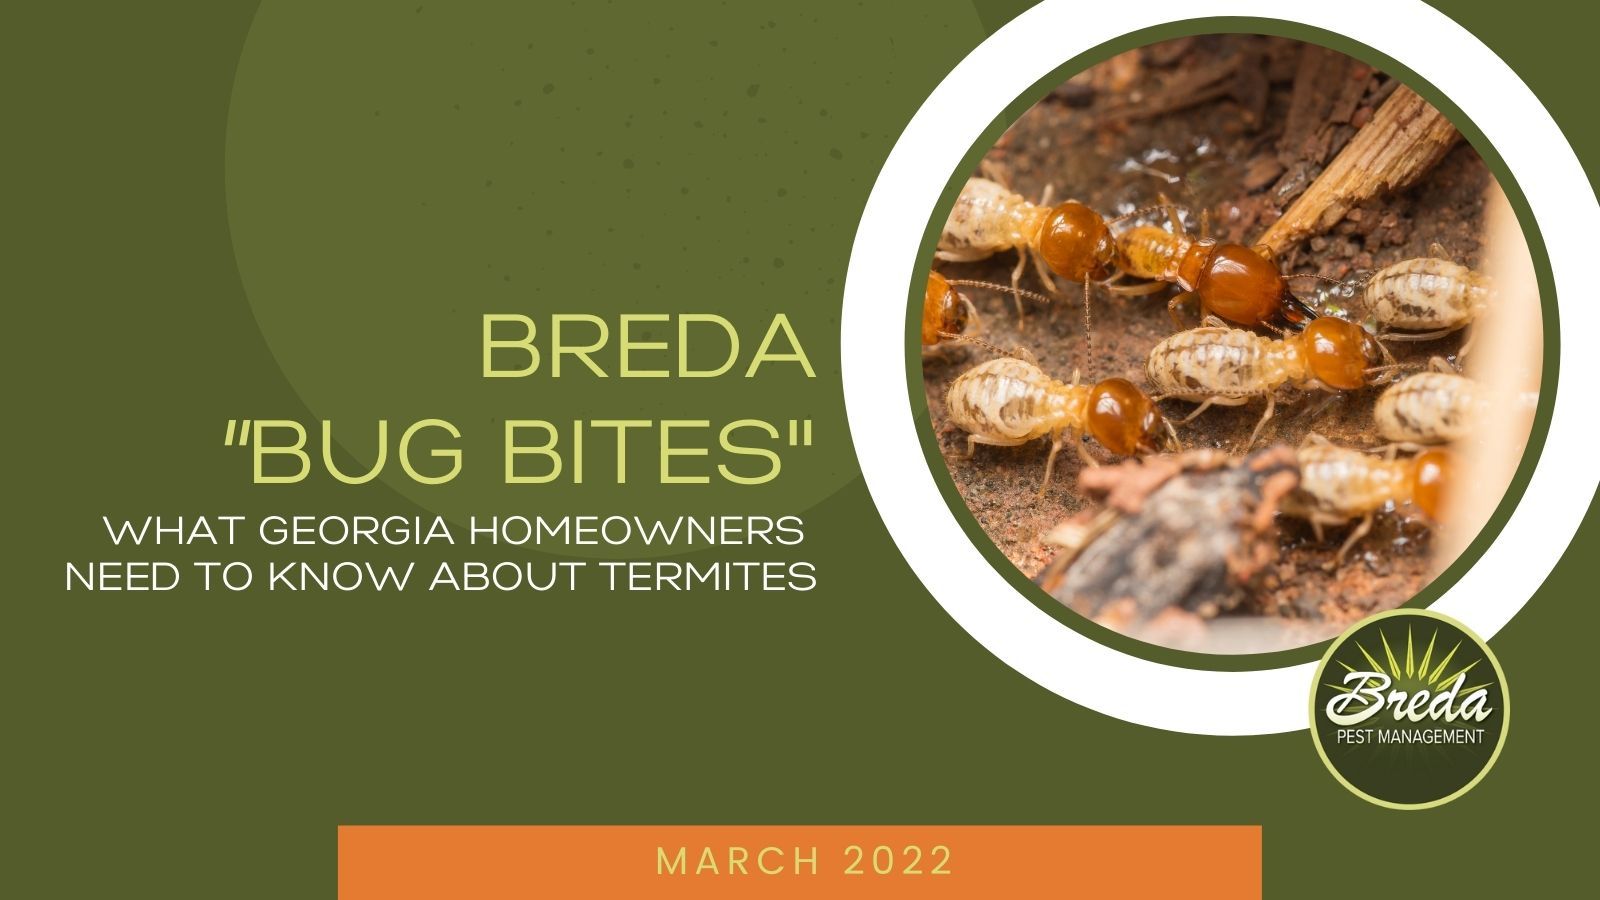 termite extermination services in atlanta